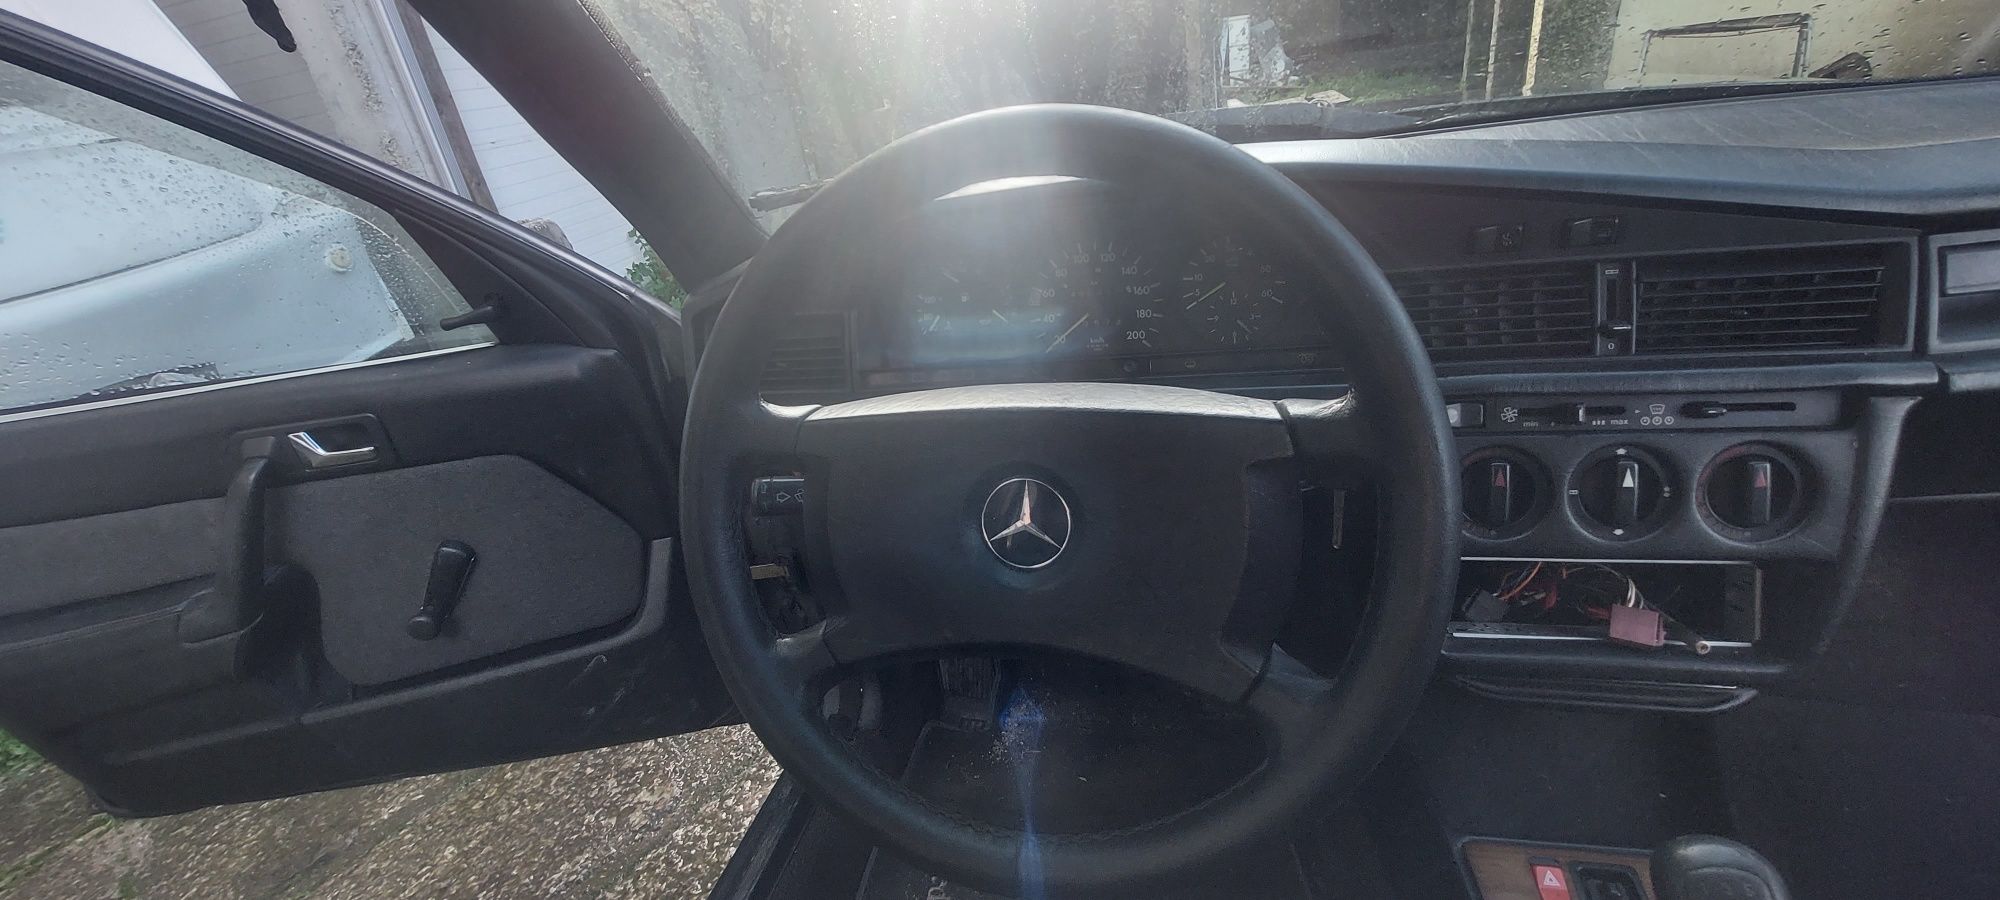 Mercedes 190 2.5d acidentado